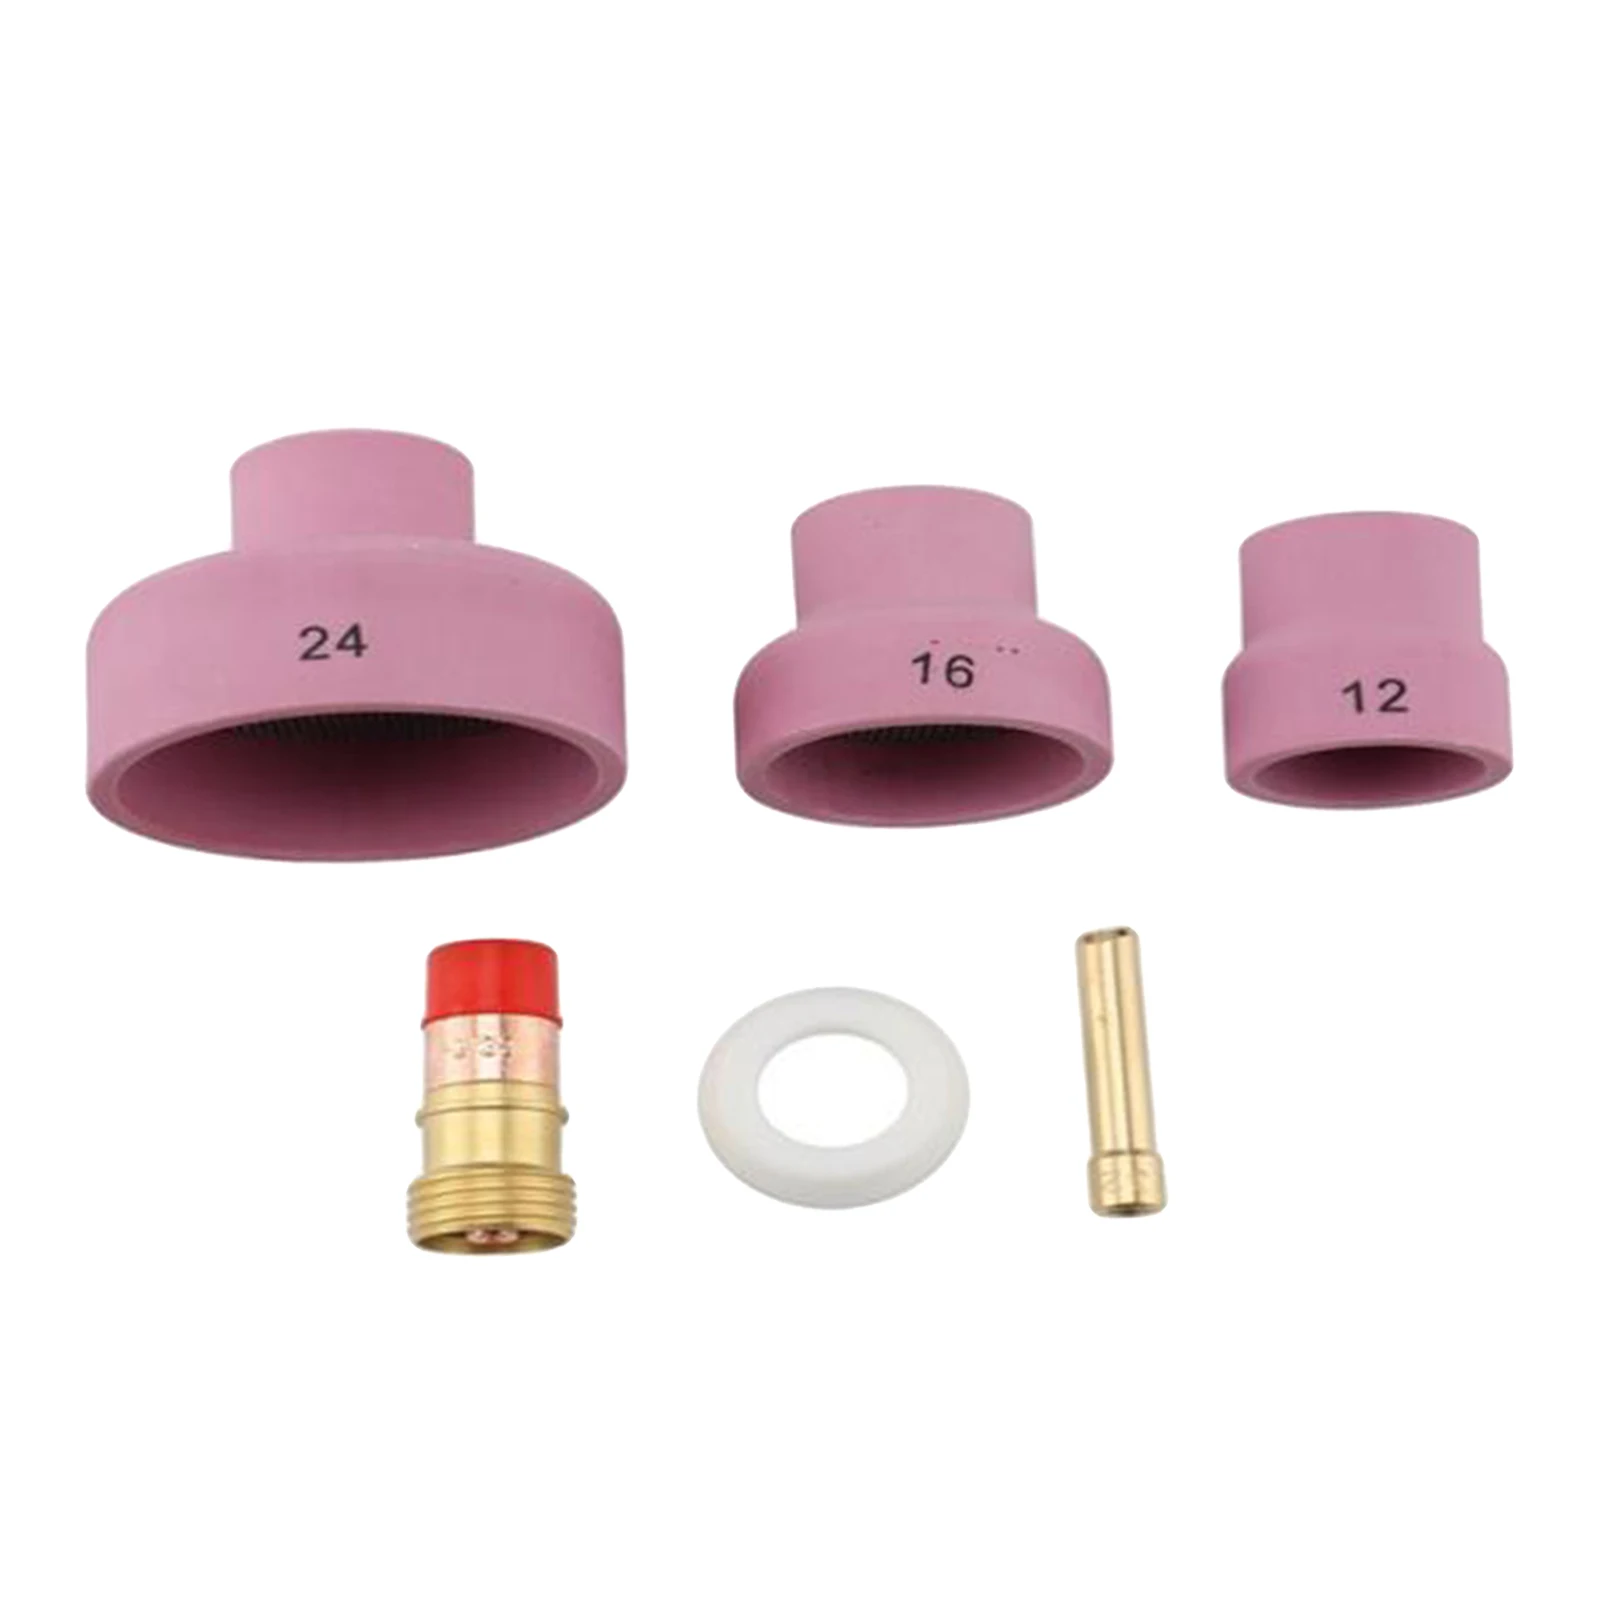 6PCS Ceramic Nozzle Set No.24/16/12 fits for WP 17/18/26, High Efficiency